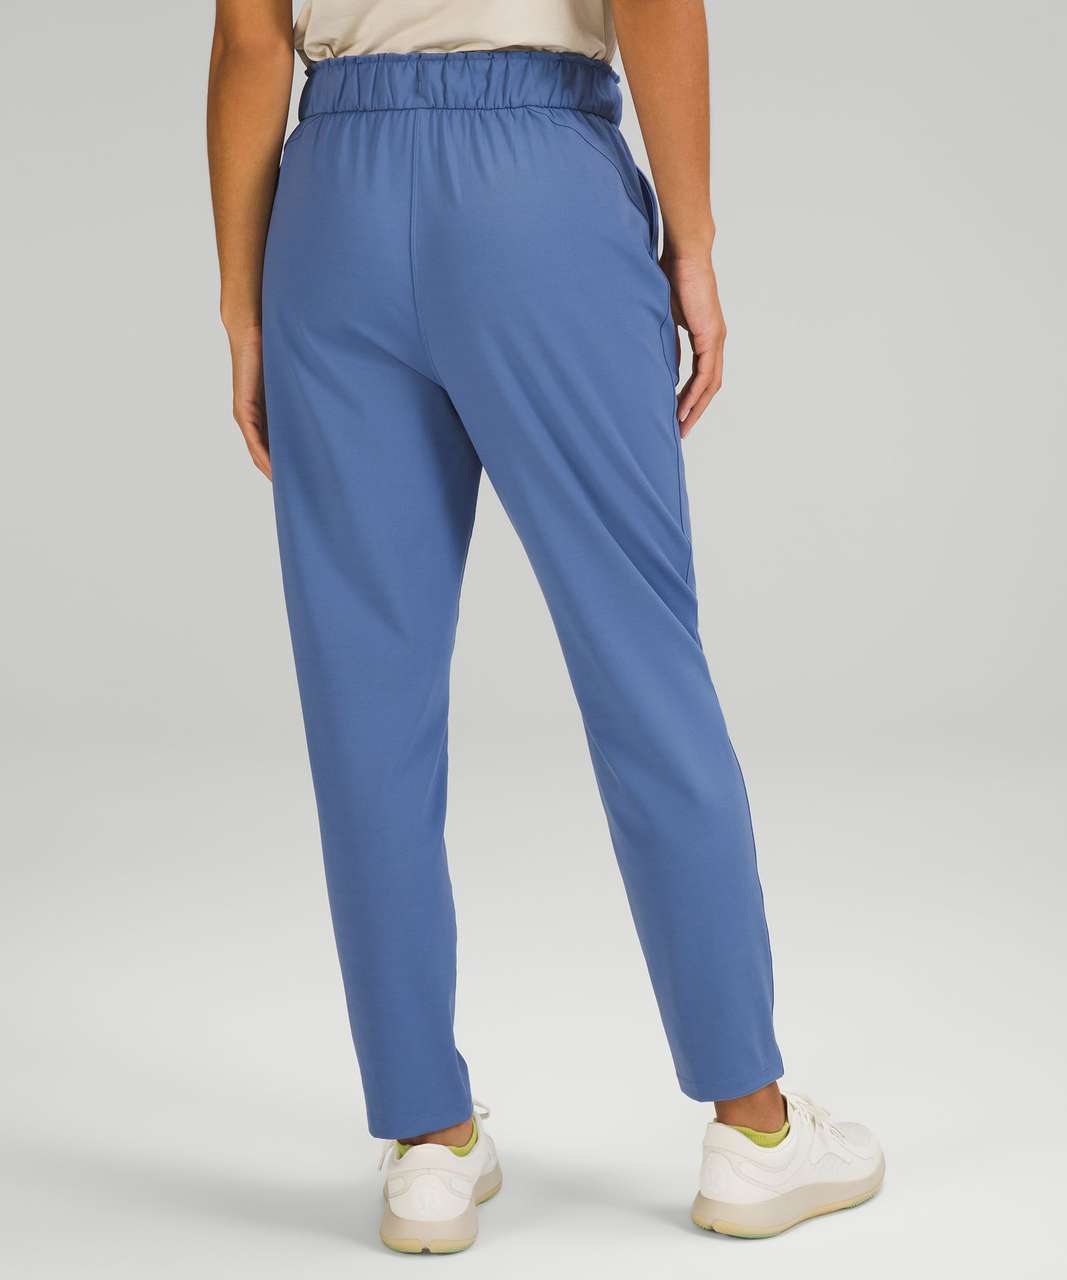 Lululemon Pants Size 25 Womens Navy Color Warpstreme High-Rise 7/8